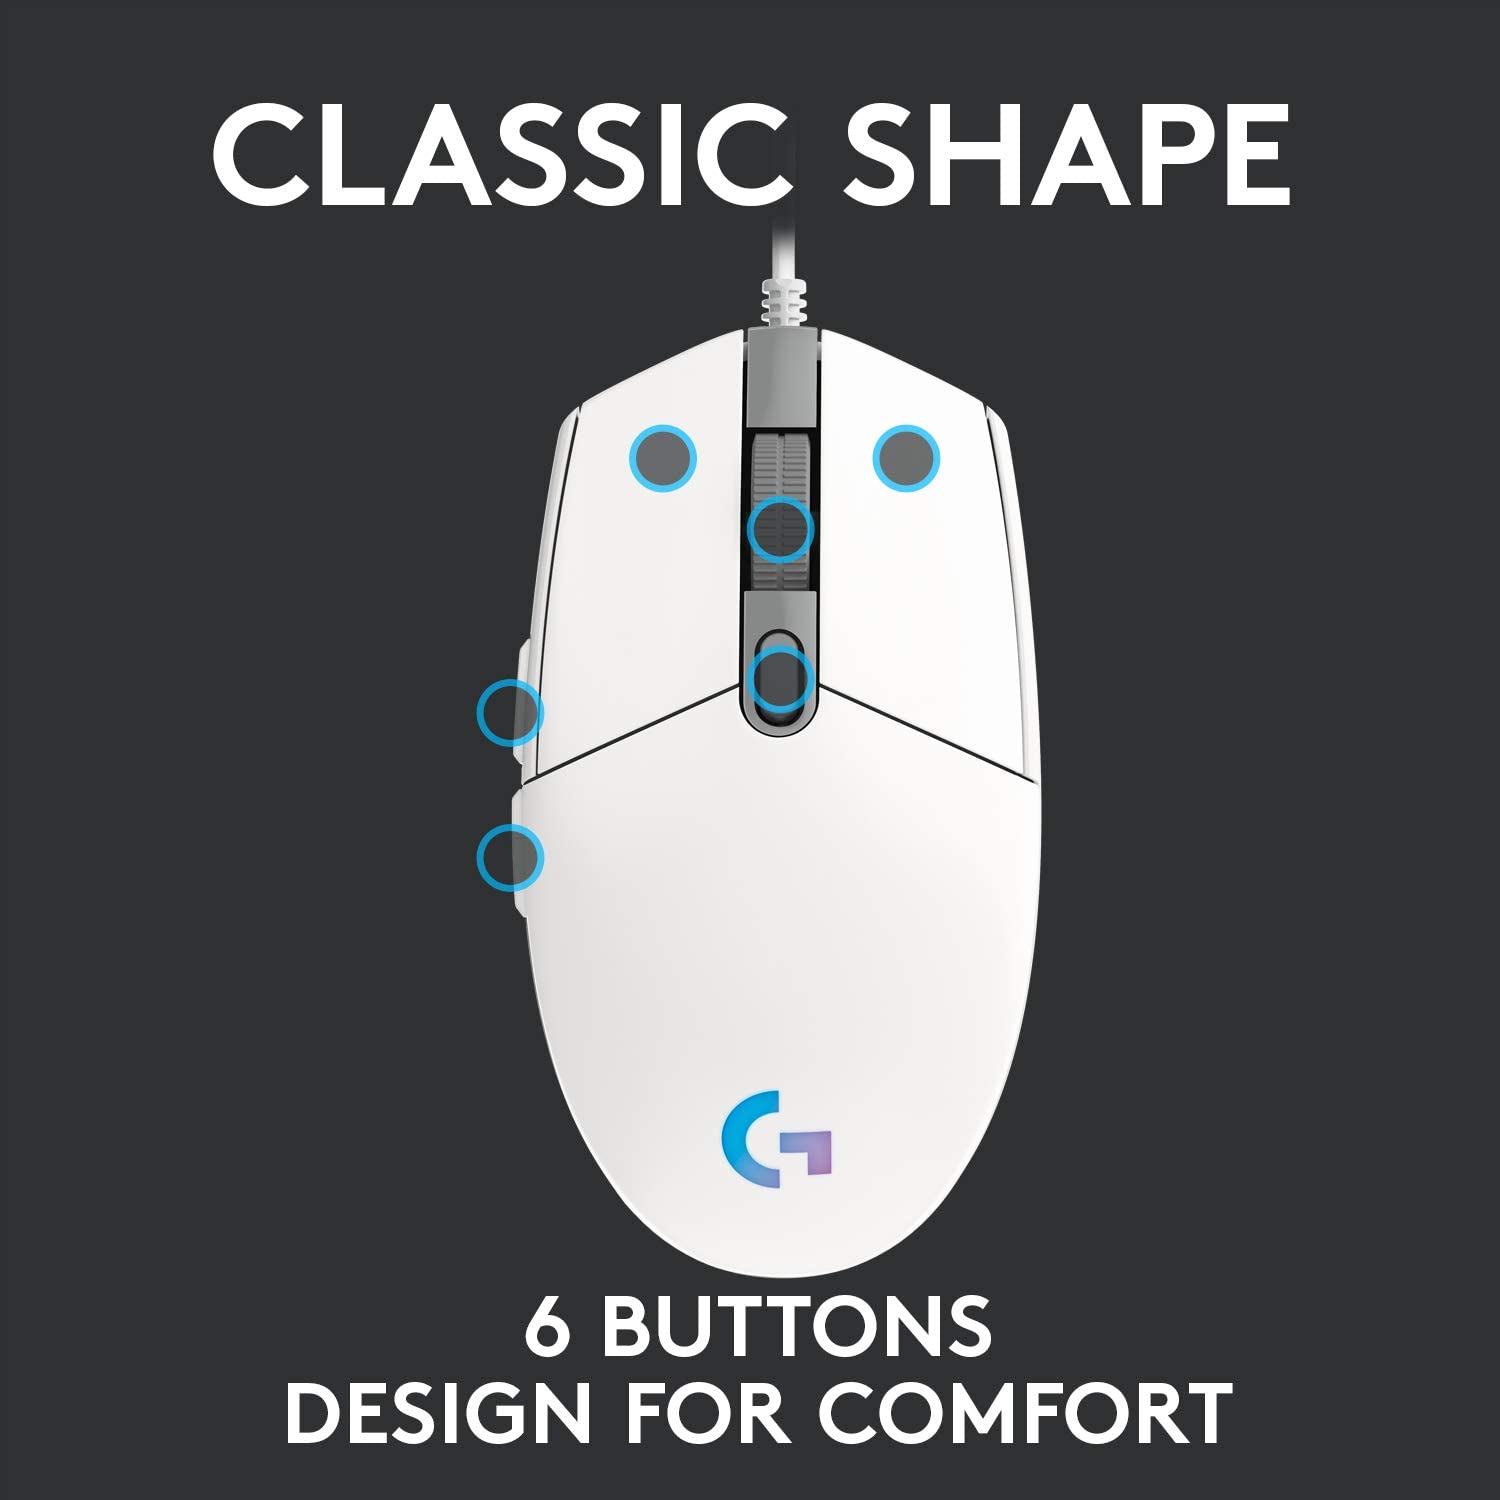 Logitech Gaming Mouse G203 Lightsync - Mouse - Usb - White